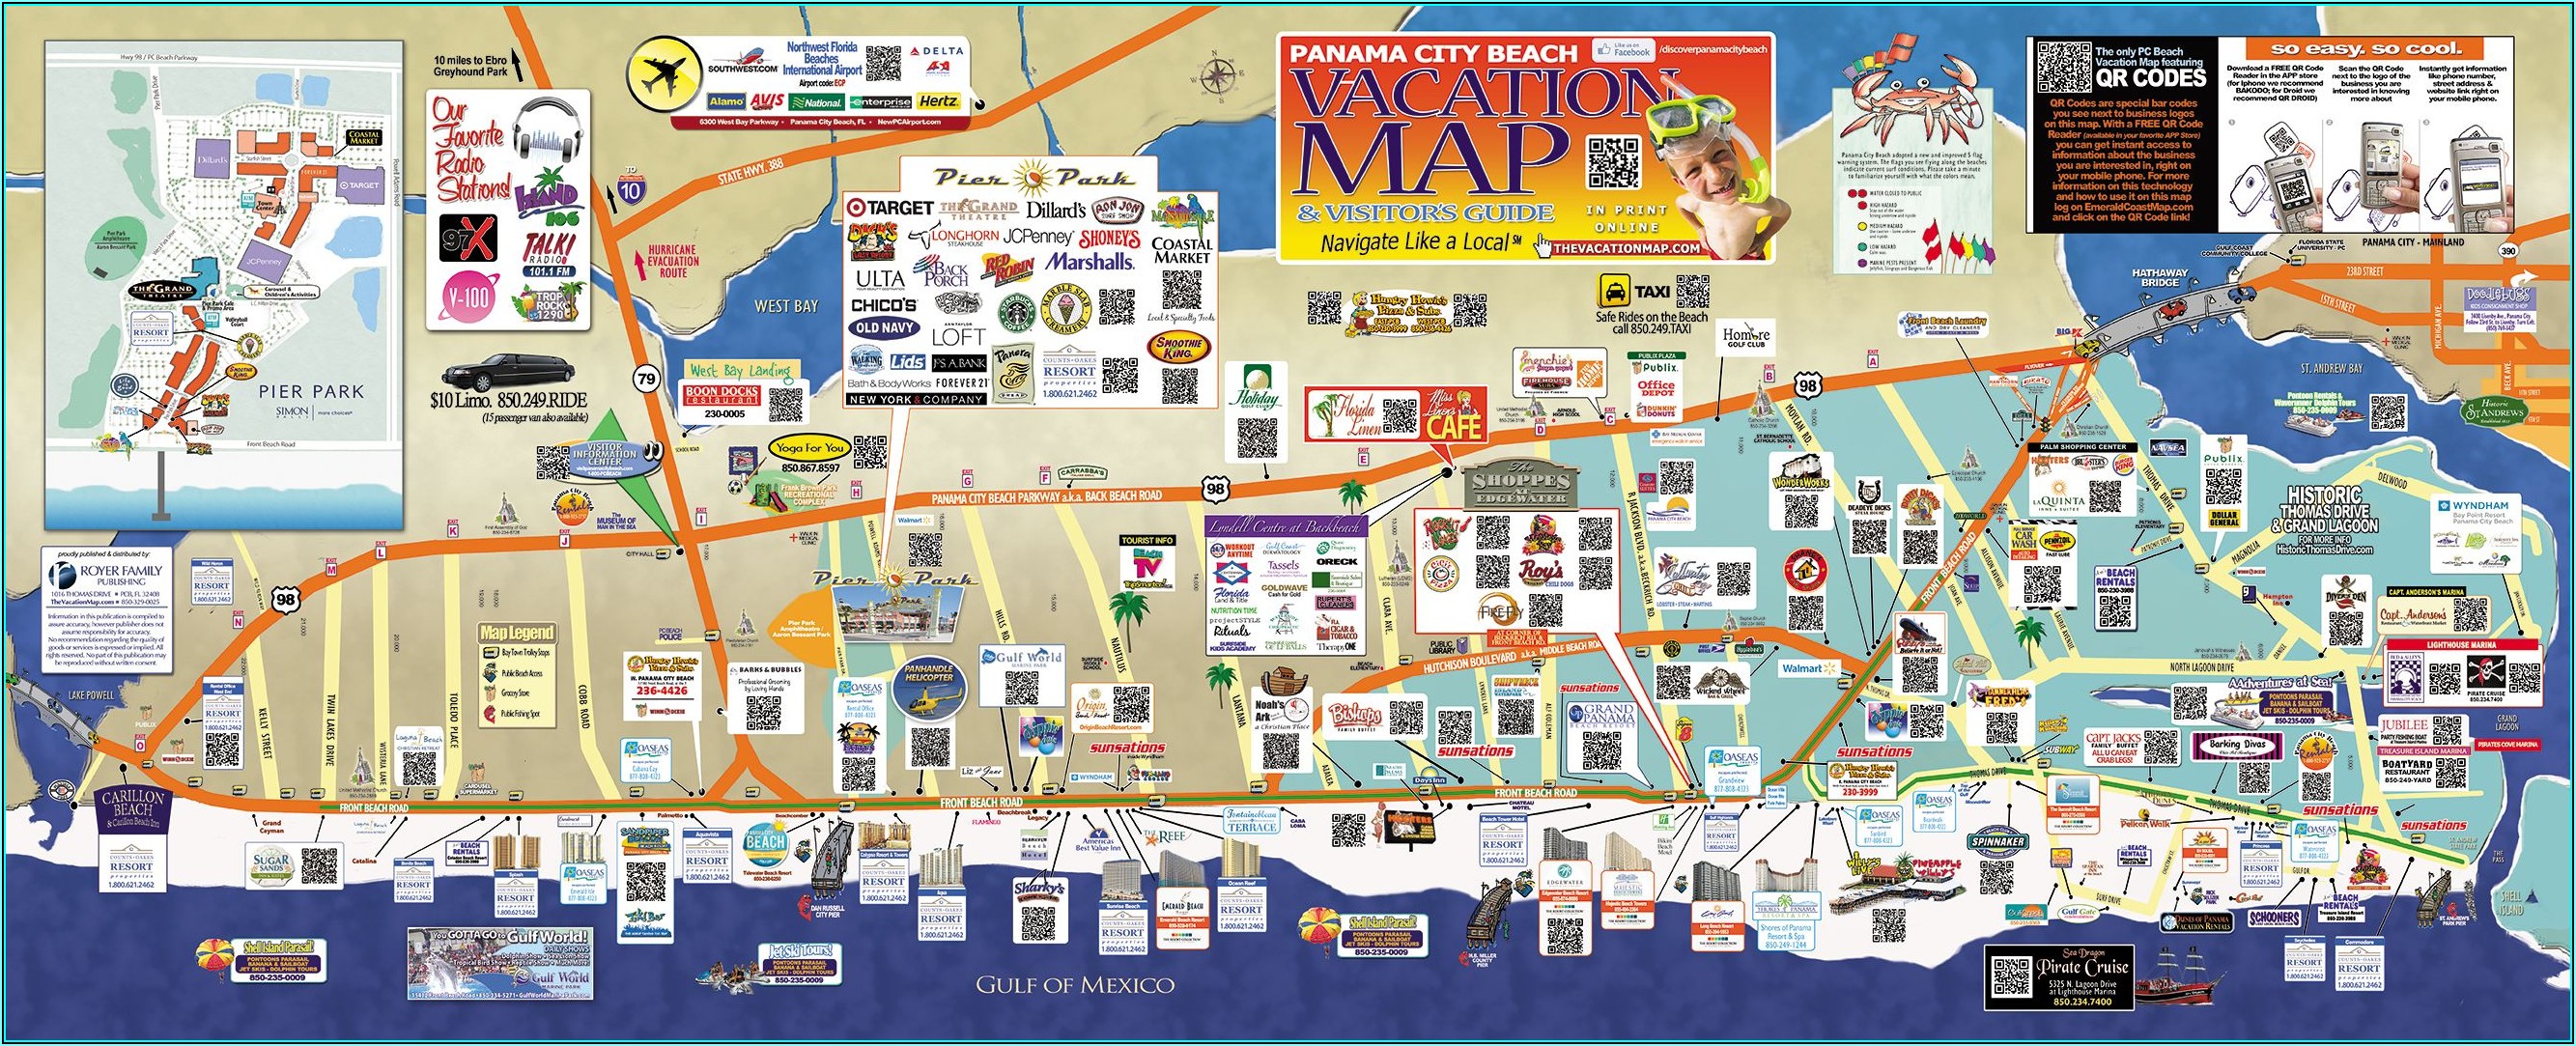 Map Of Panama City Beach Hotels And Condos